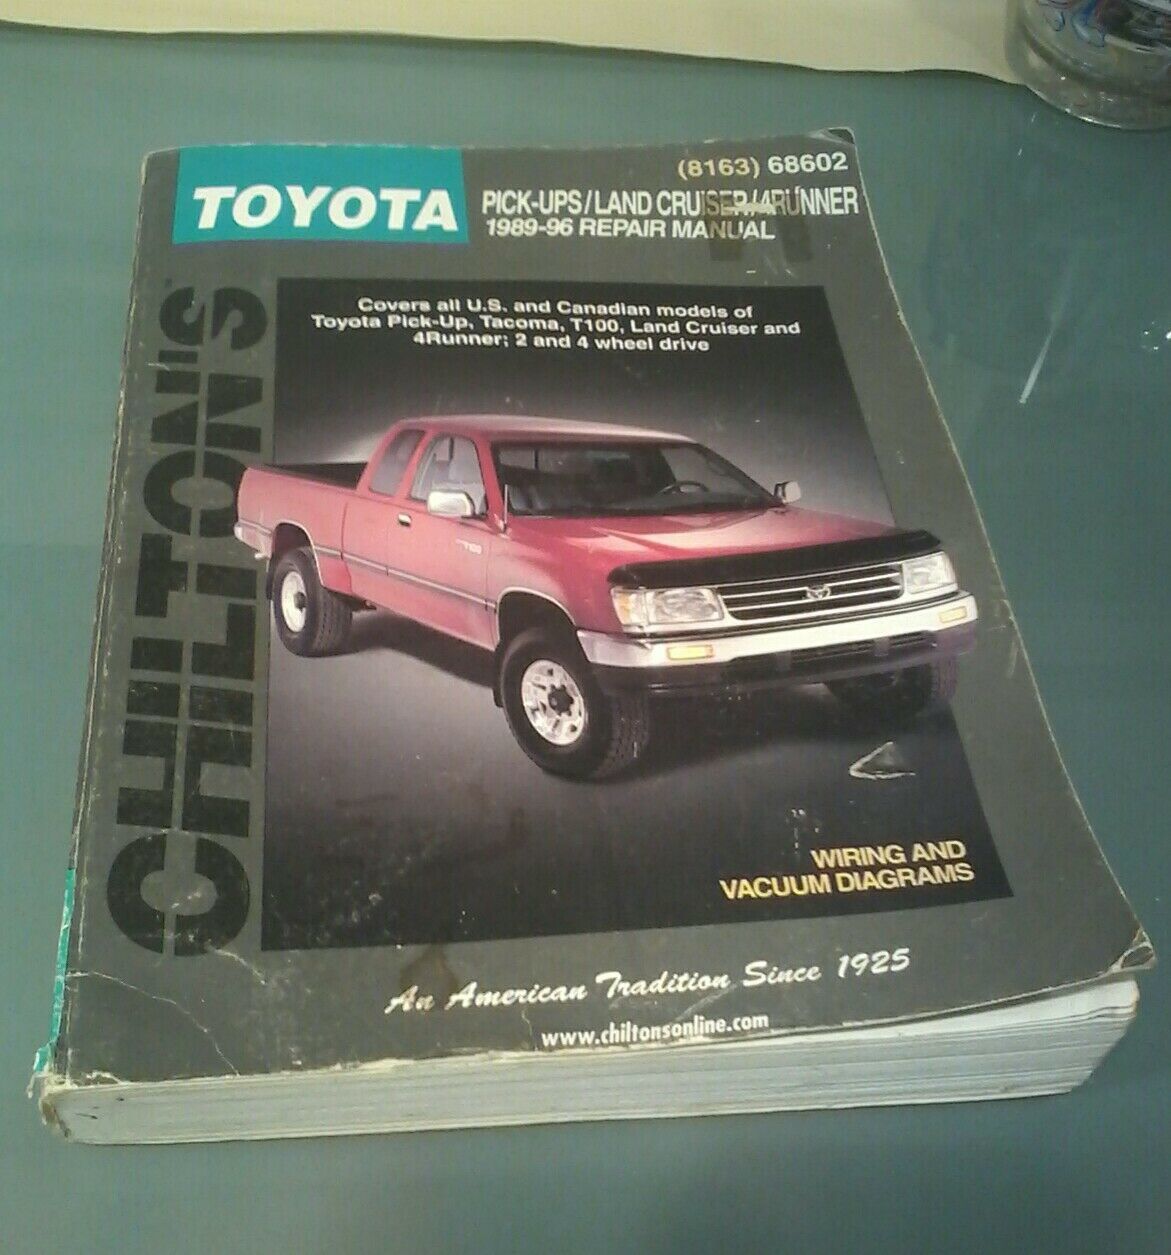 Primary image for Chiltons Toyota Pick Ups,Land Cruiser,4 Runner 1989-96 Repair Manual(8163) 68602